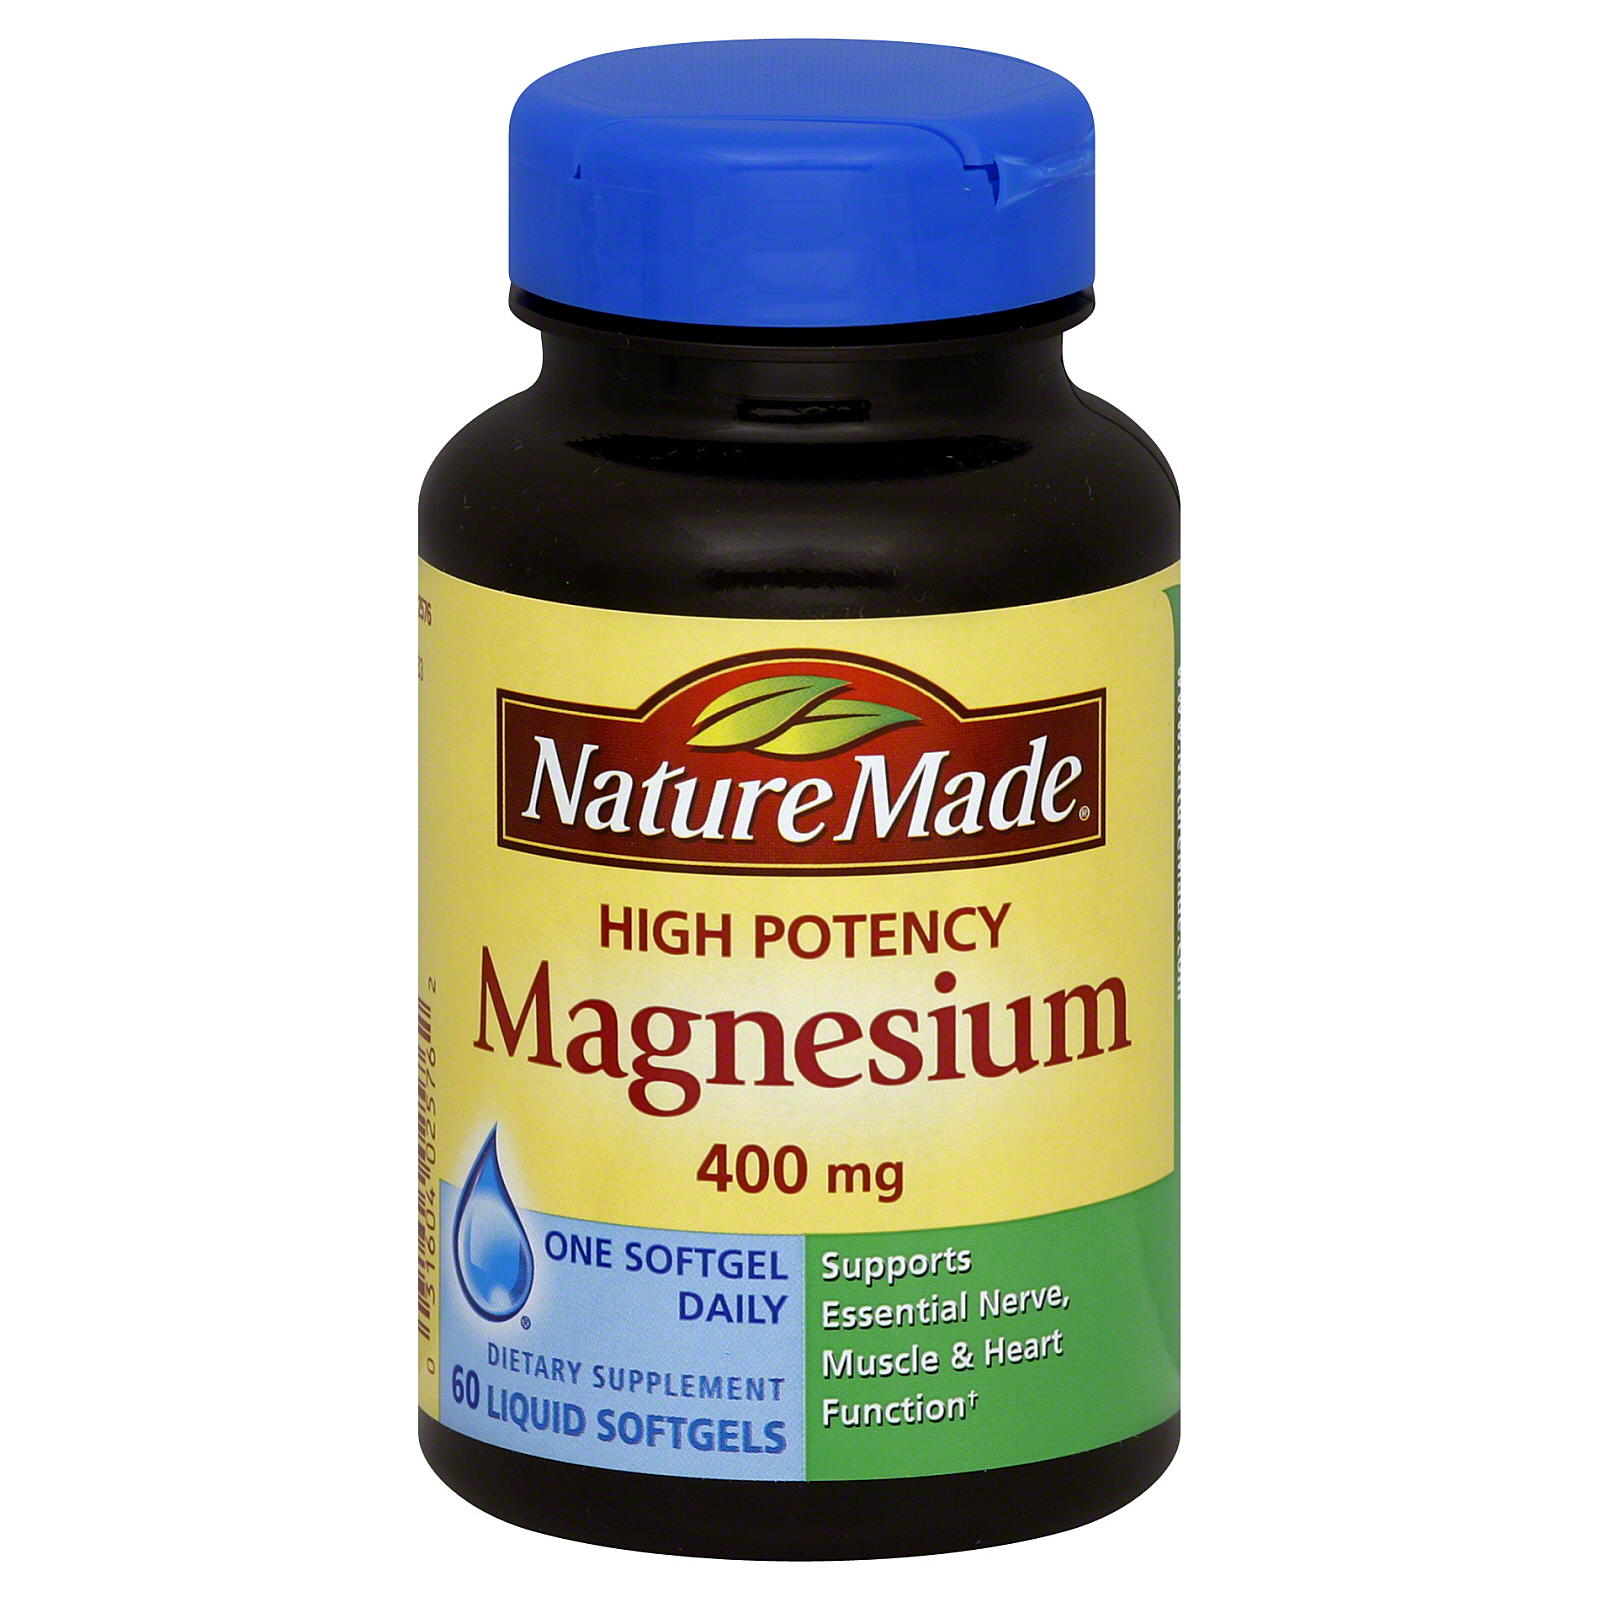 Nature Made High Potency Magnesium 400 mg, 60 Softgels